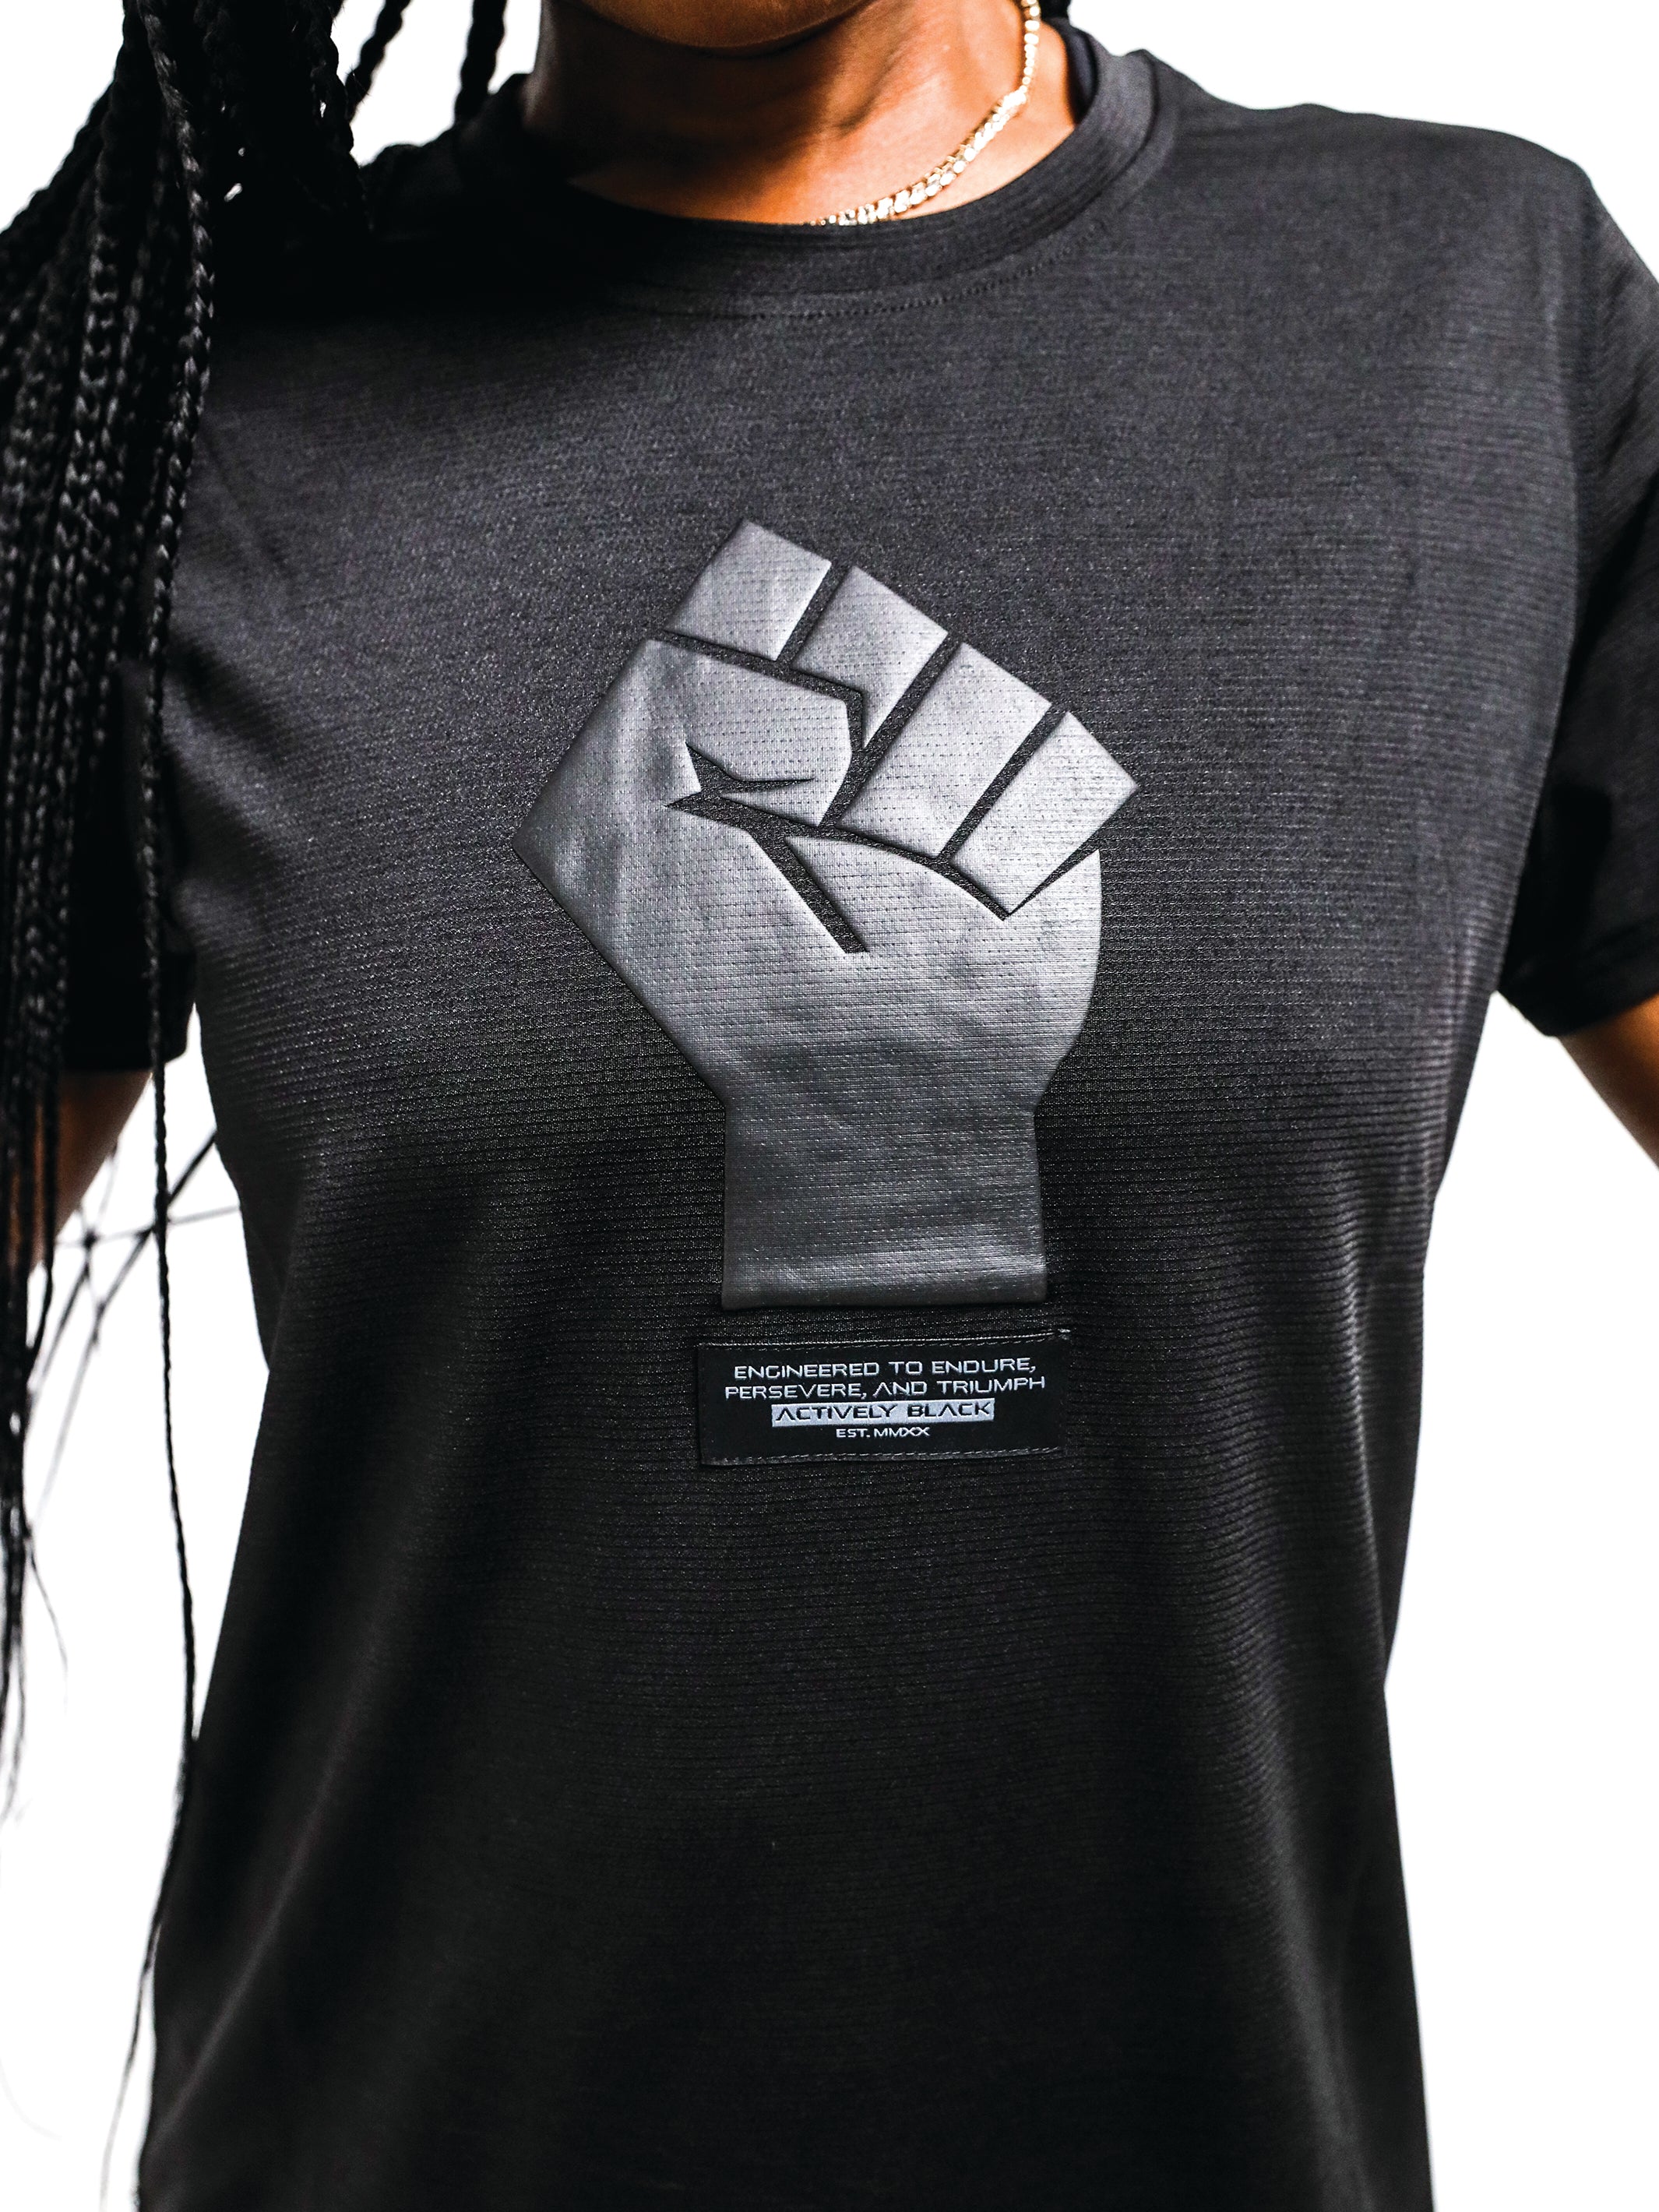 Women's Black Fist Performance Shirt